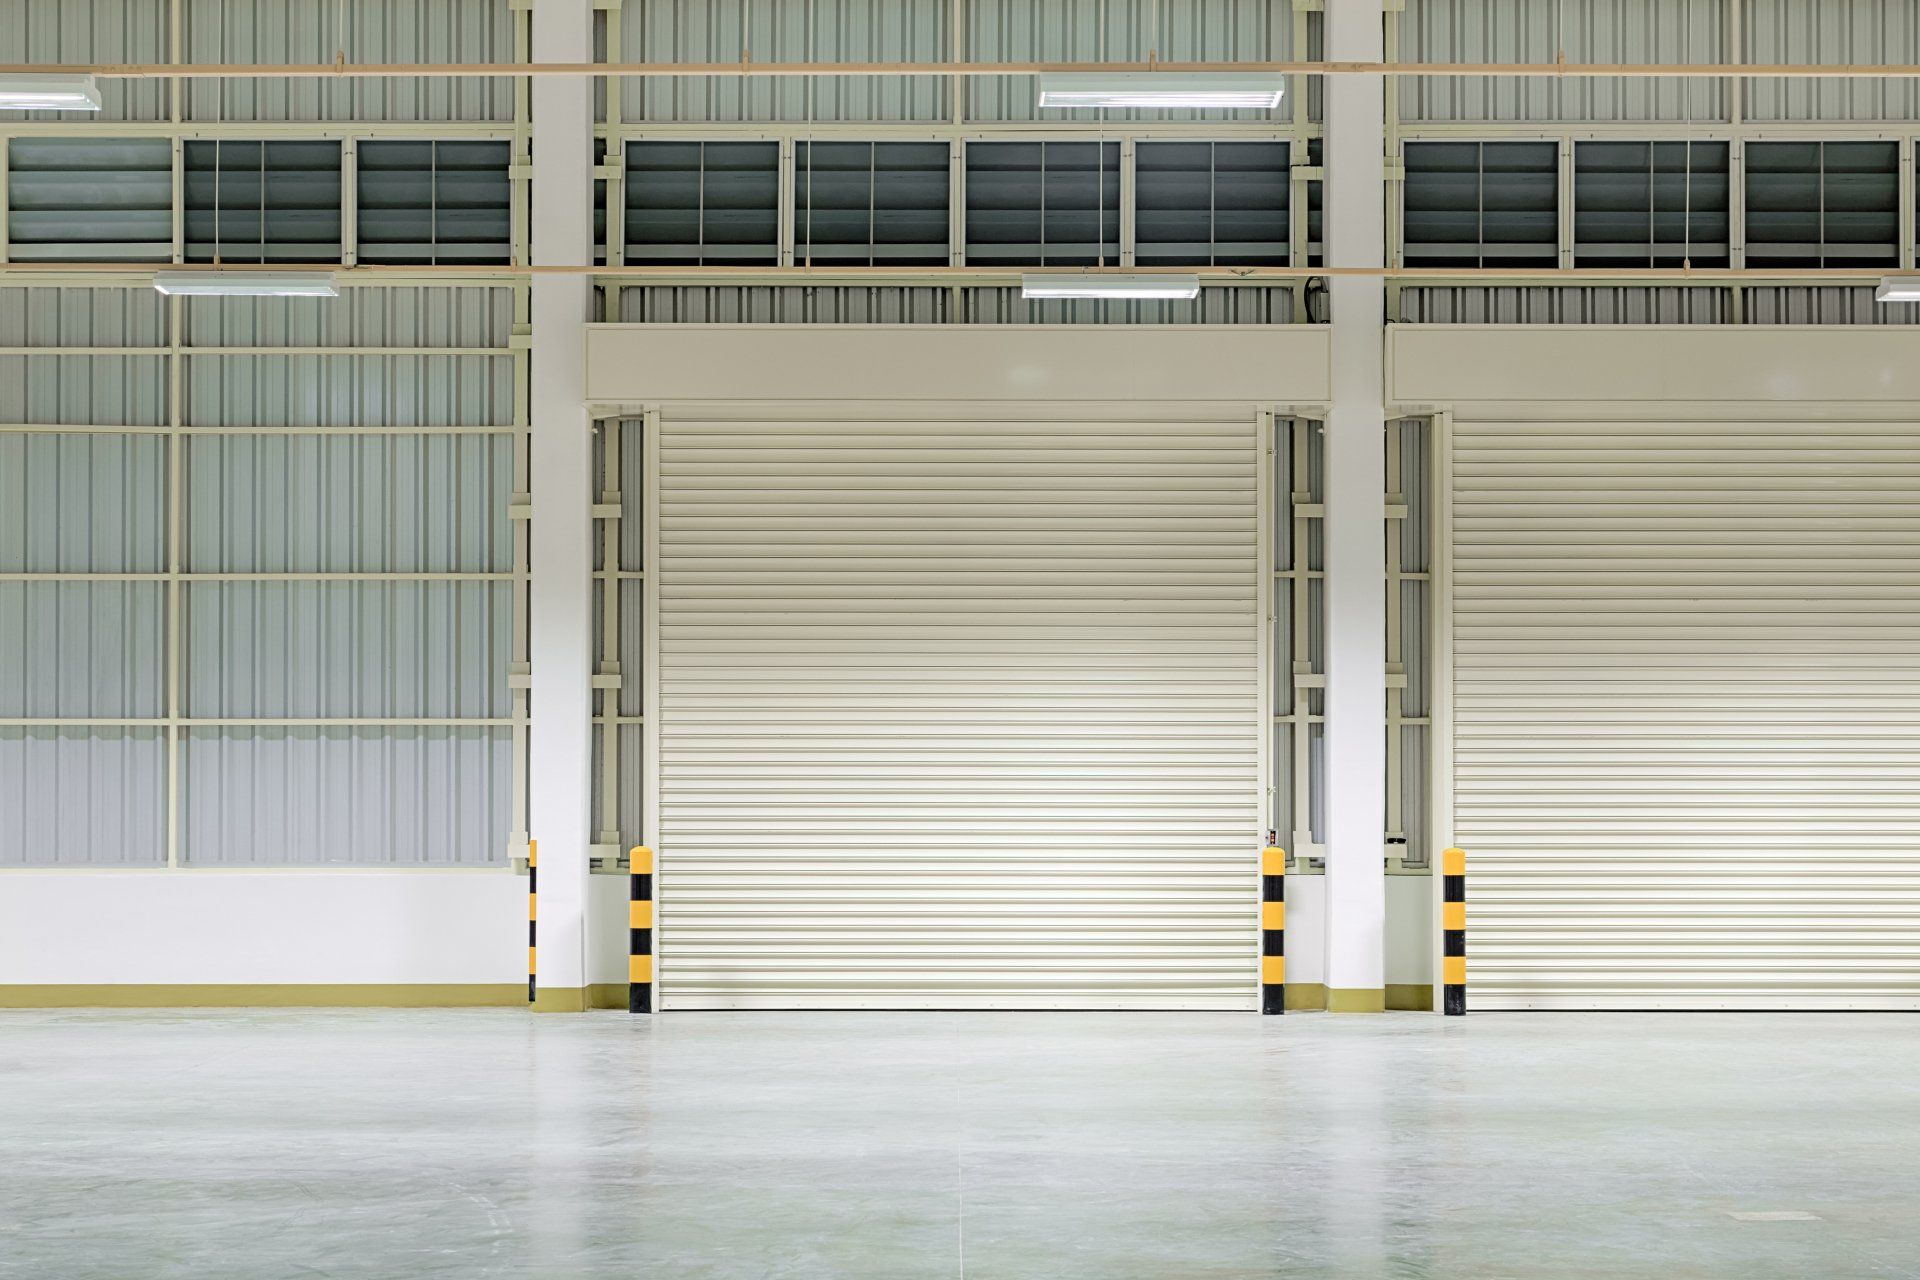 Roller door or roller shutter using for factory, warehouse or hangar